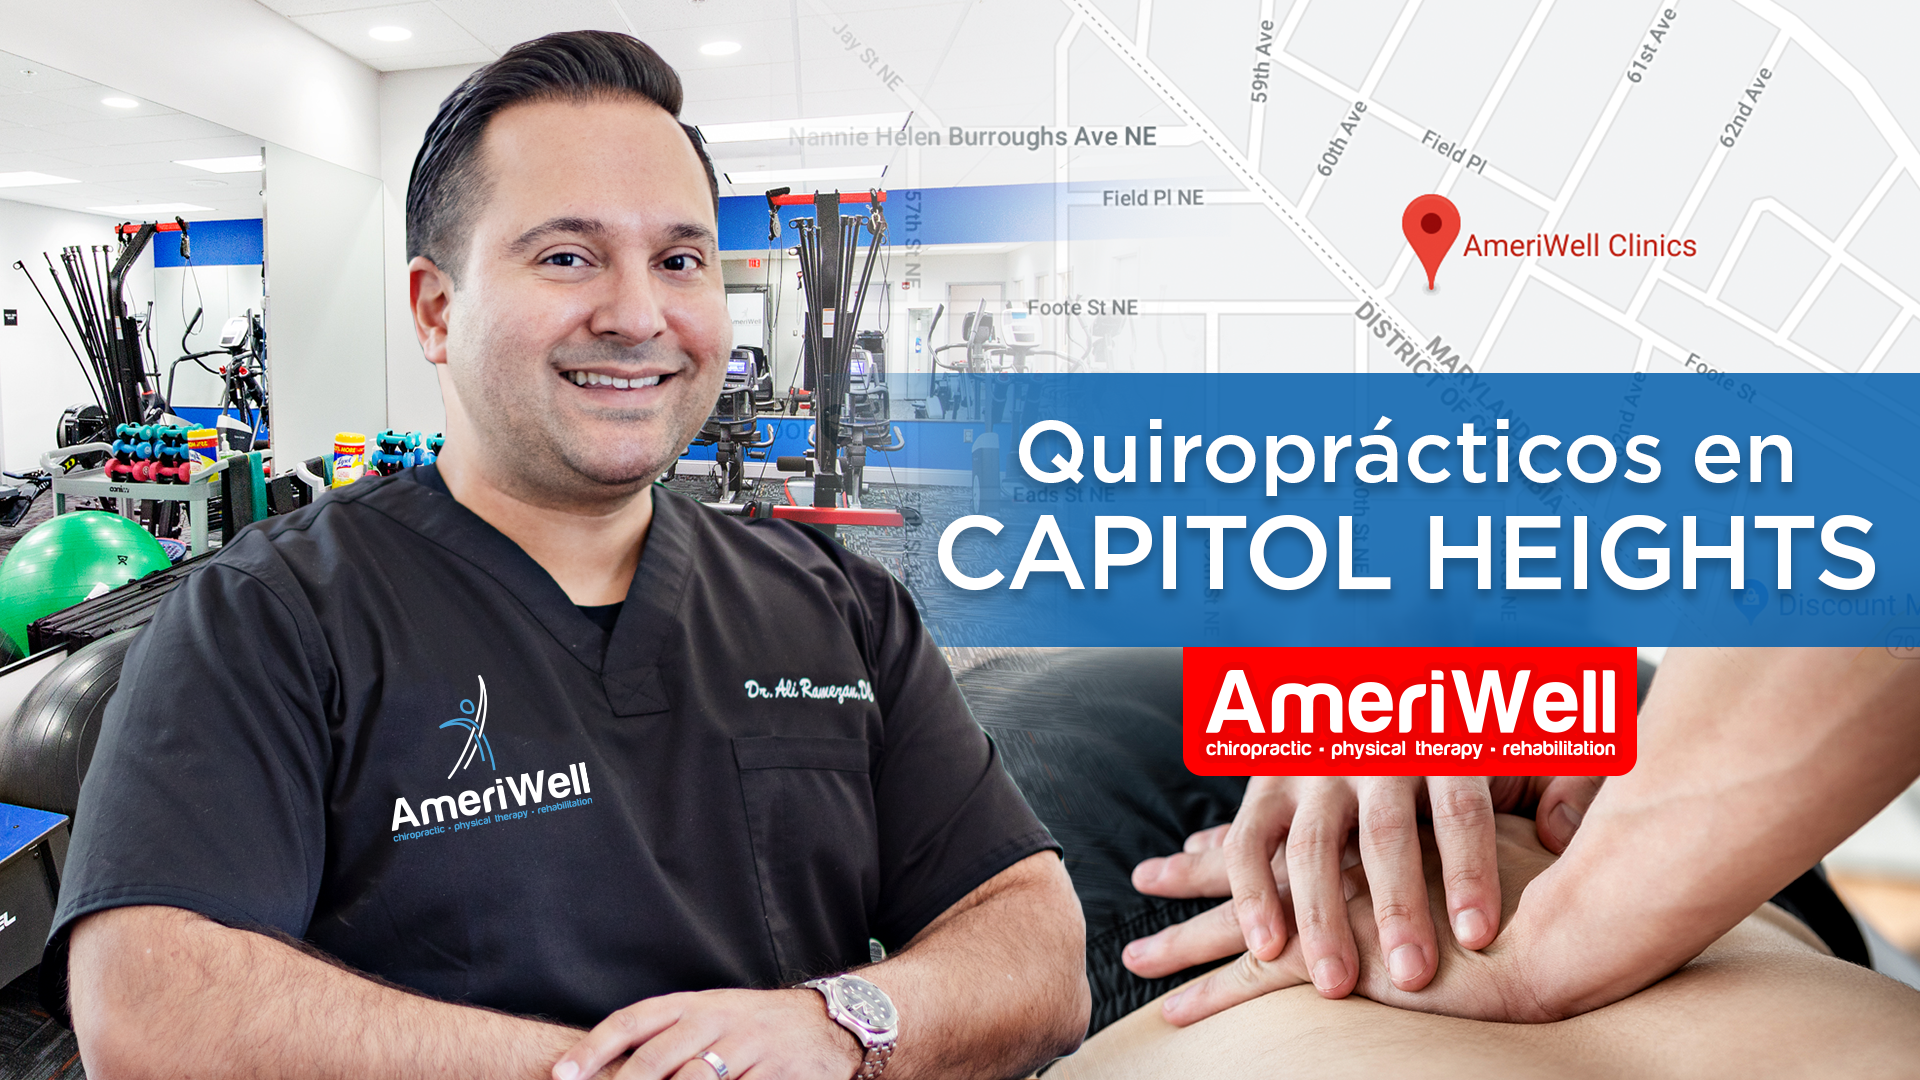 Capitol Heights - Ameriwell Clinics Los mejores Quiroprácticos